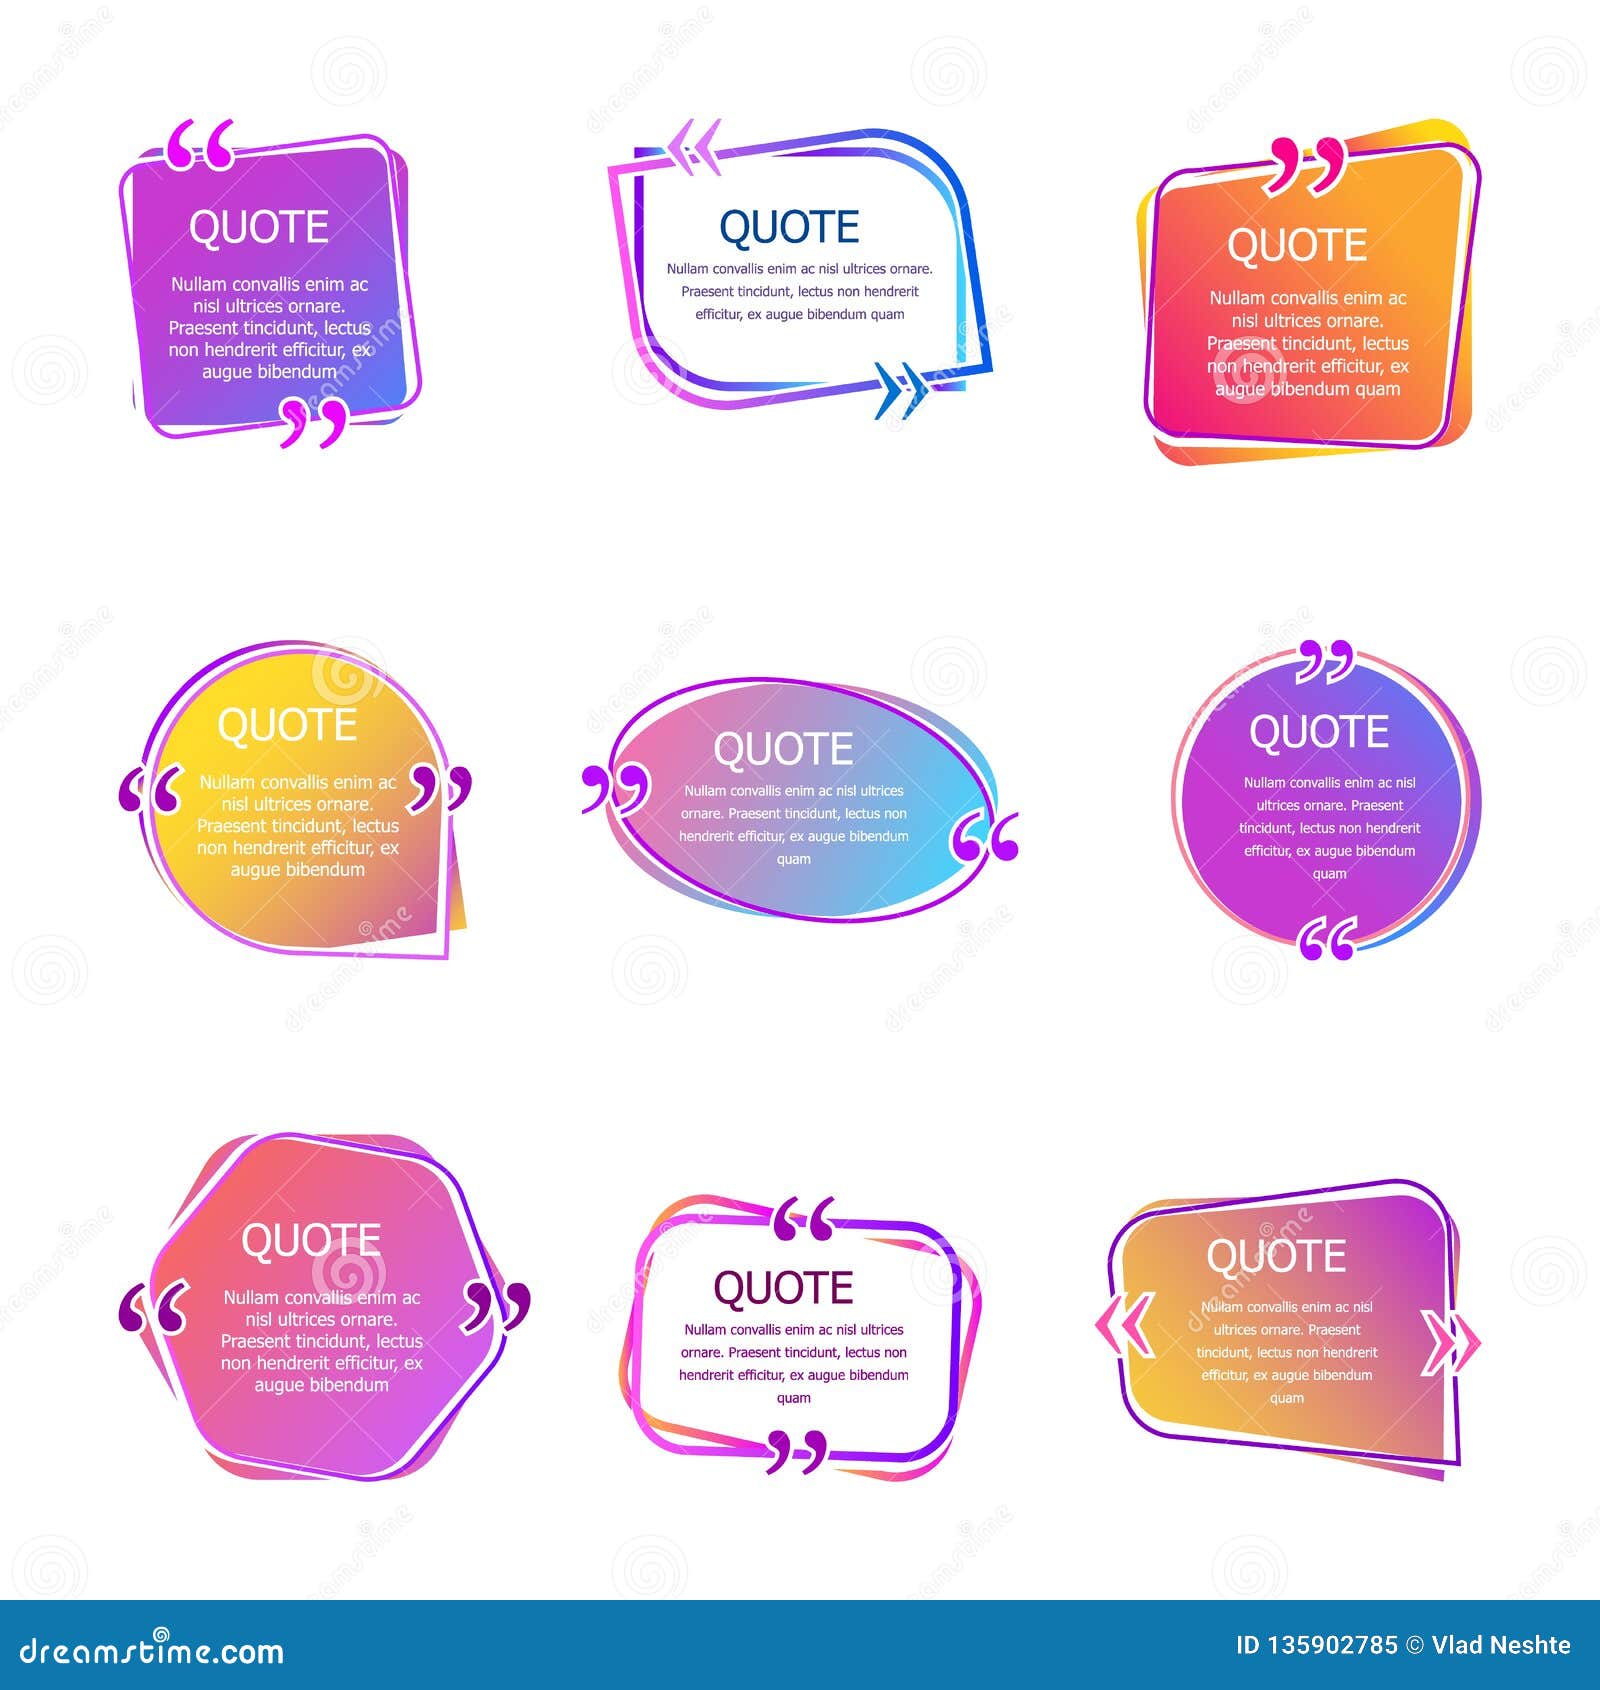 colored speech bubble template